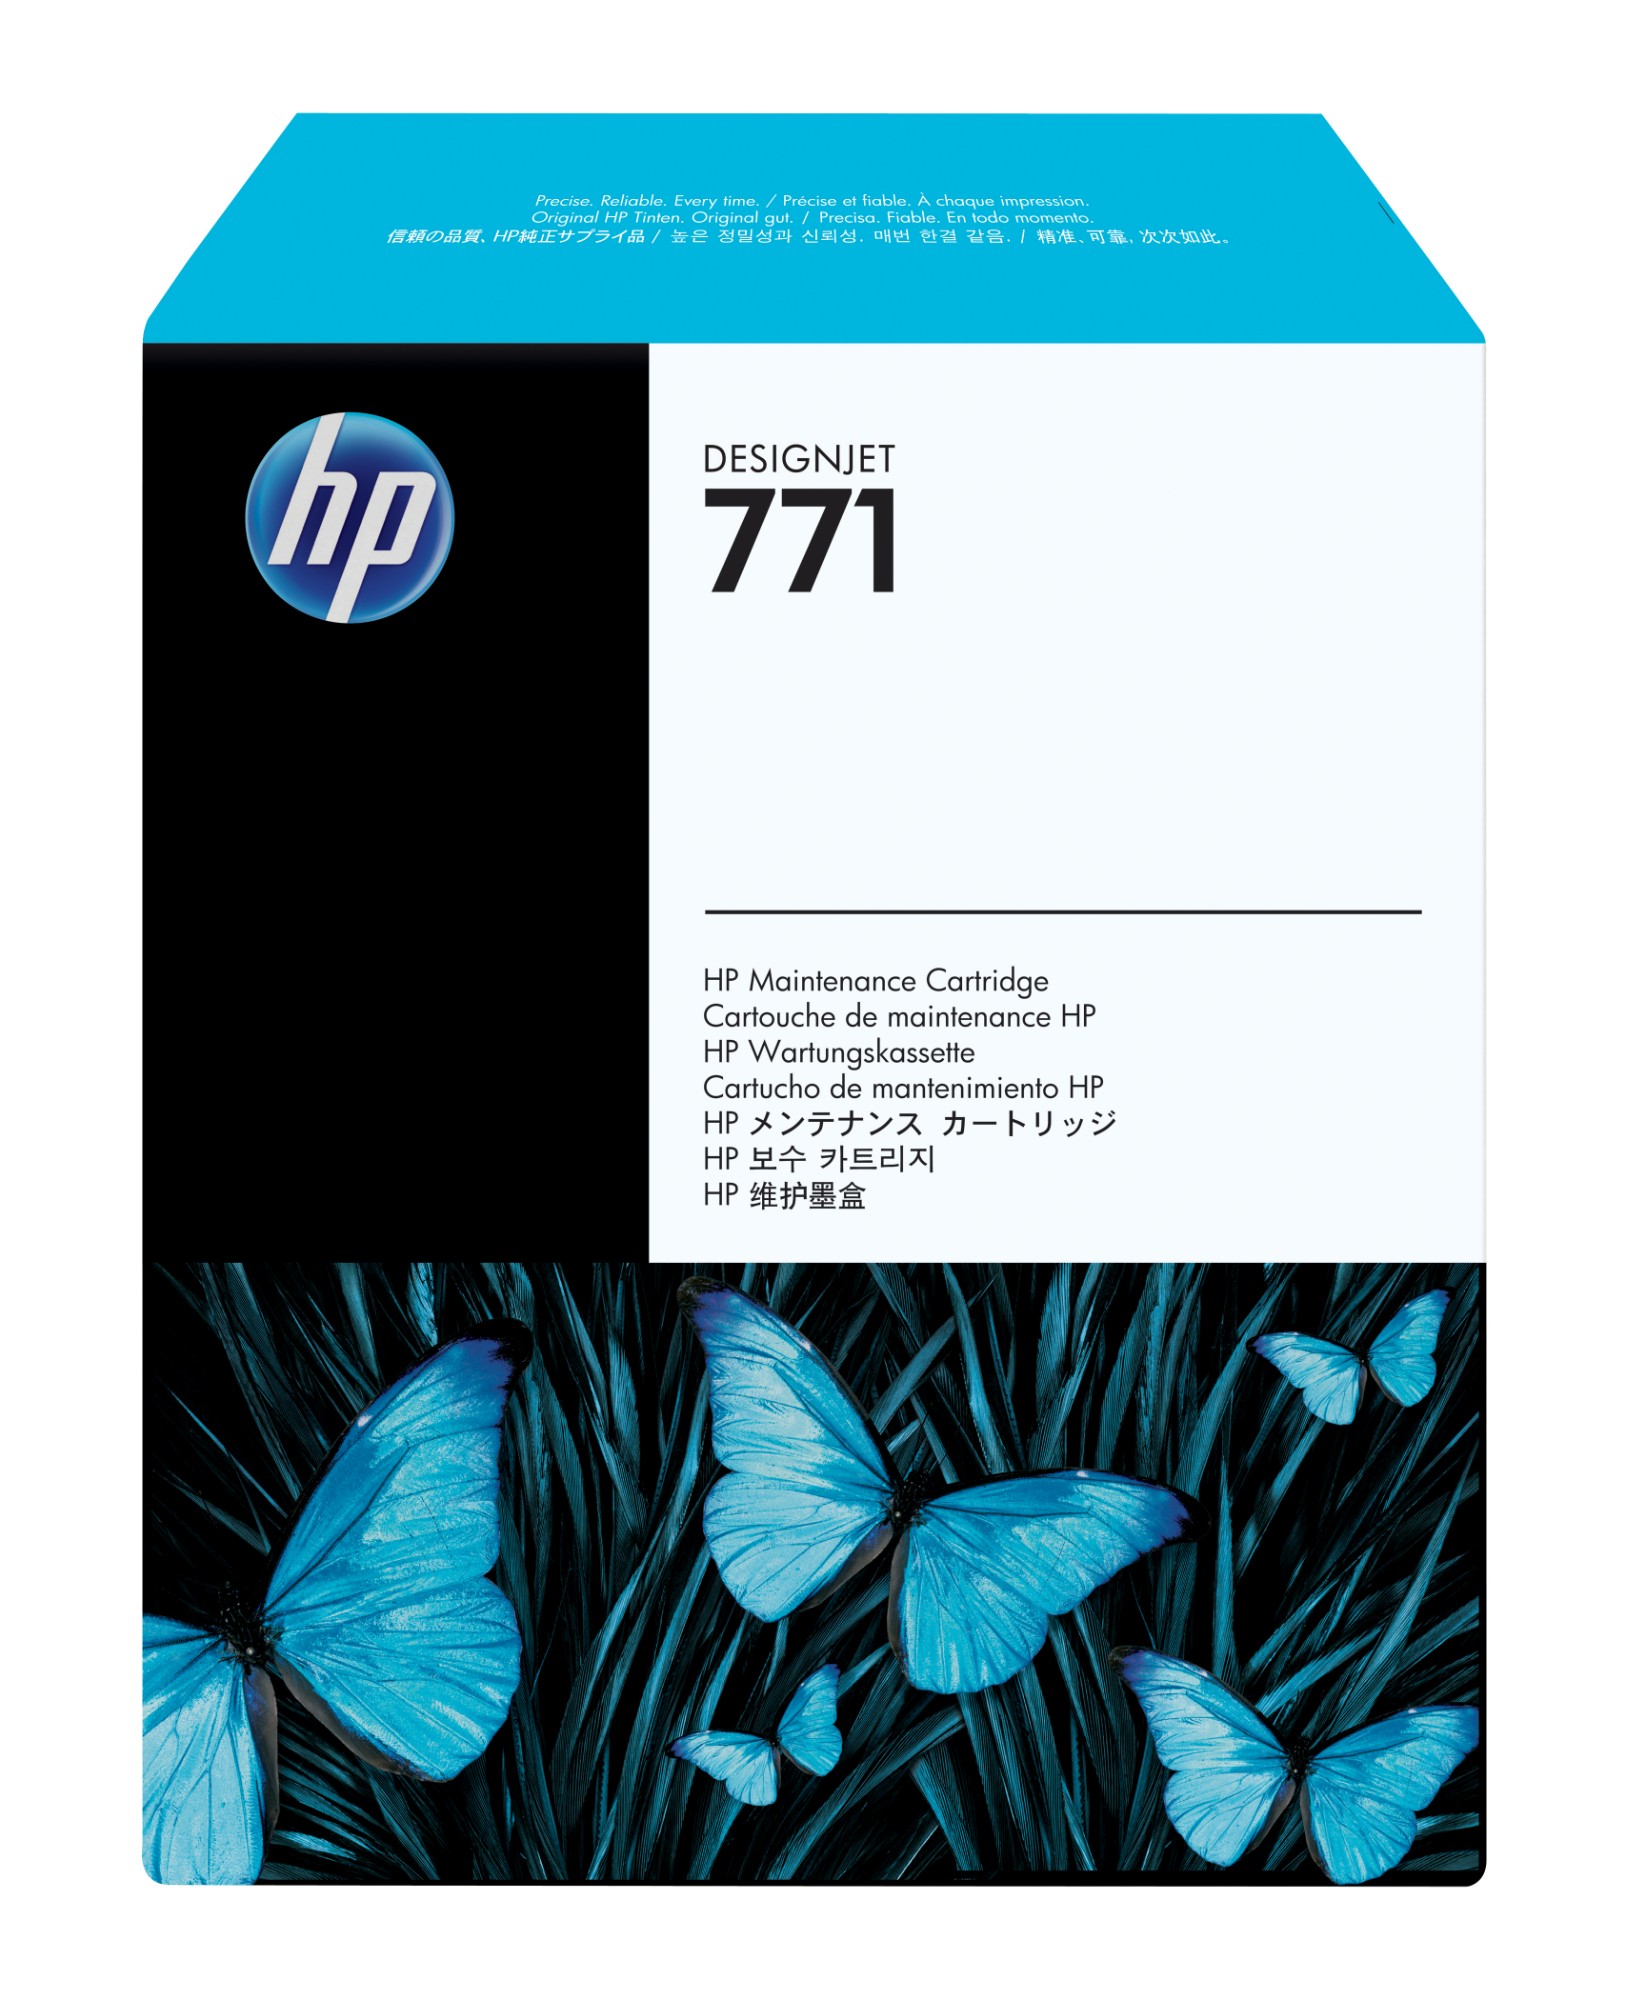 HP 771 Designjet Maintenance Cartridge CH644A